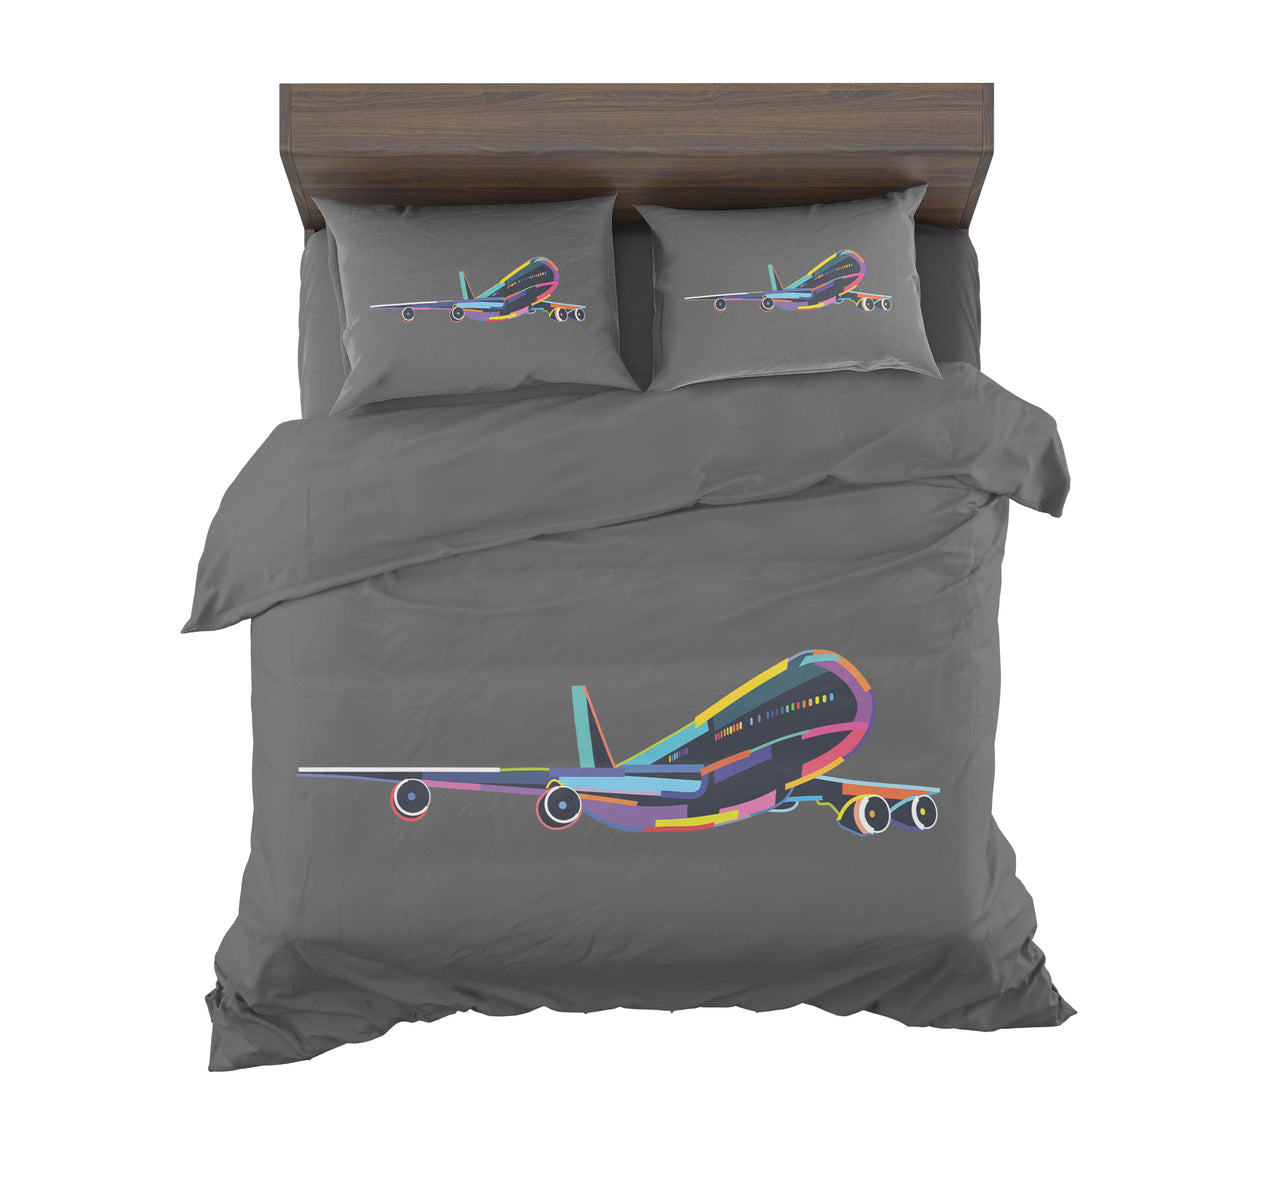 Multicolor Airplane Designed Bedding Sets